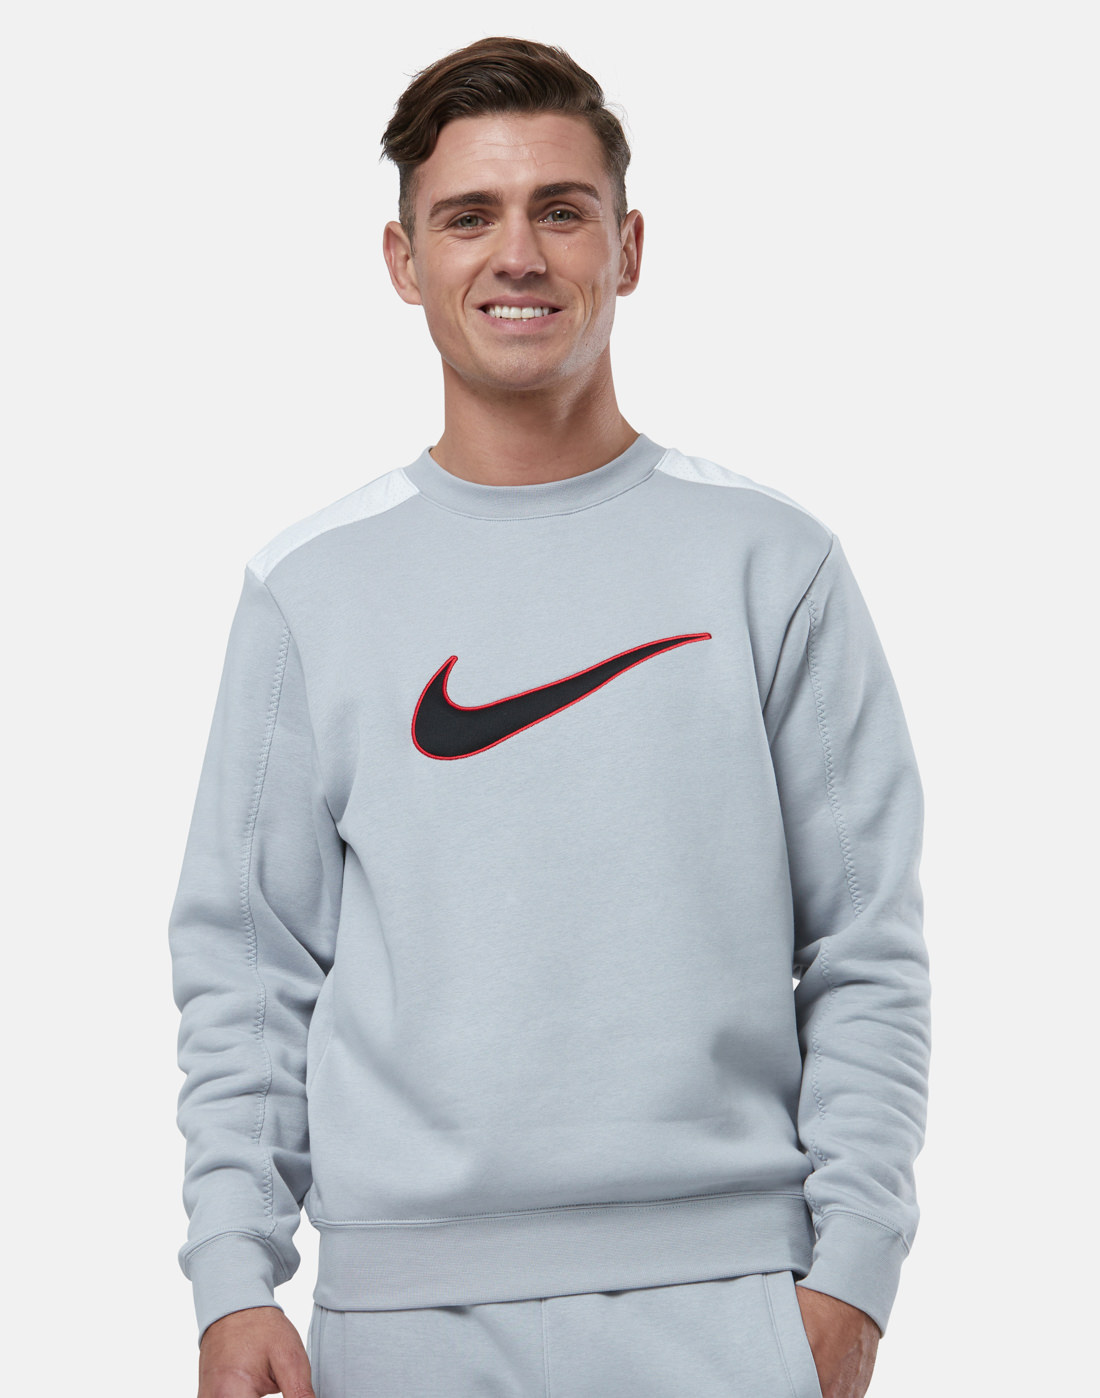 Nike Mens Sports Pack Fleece Crew Neck Sweatshirt - Grey | Life Style ...